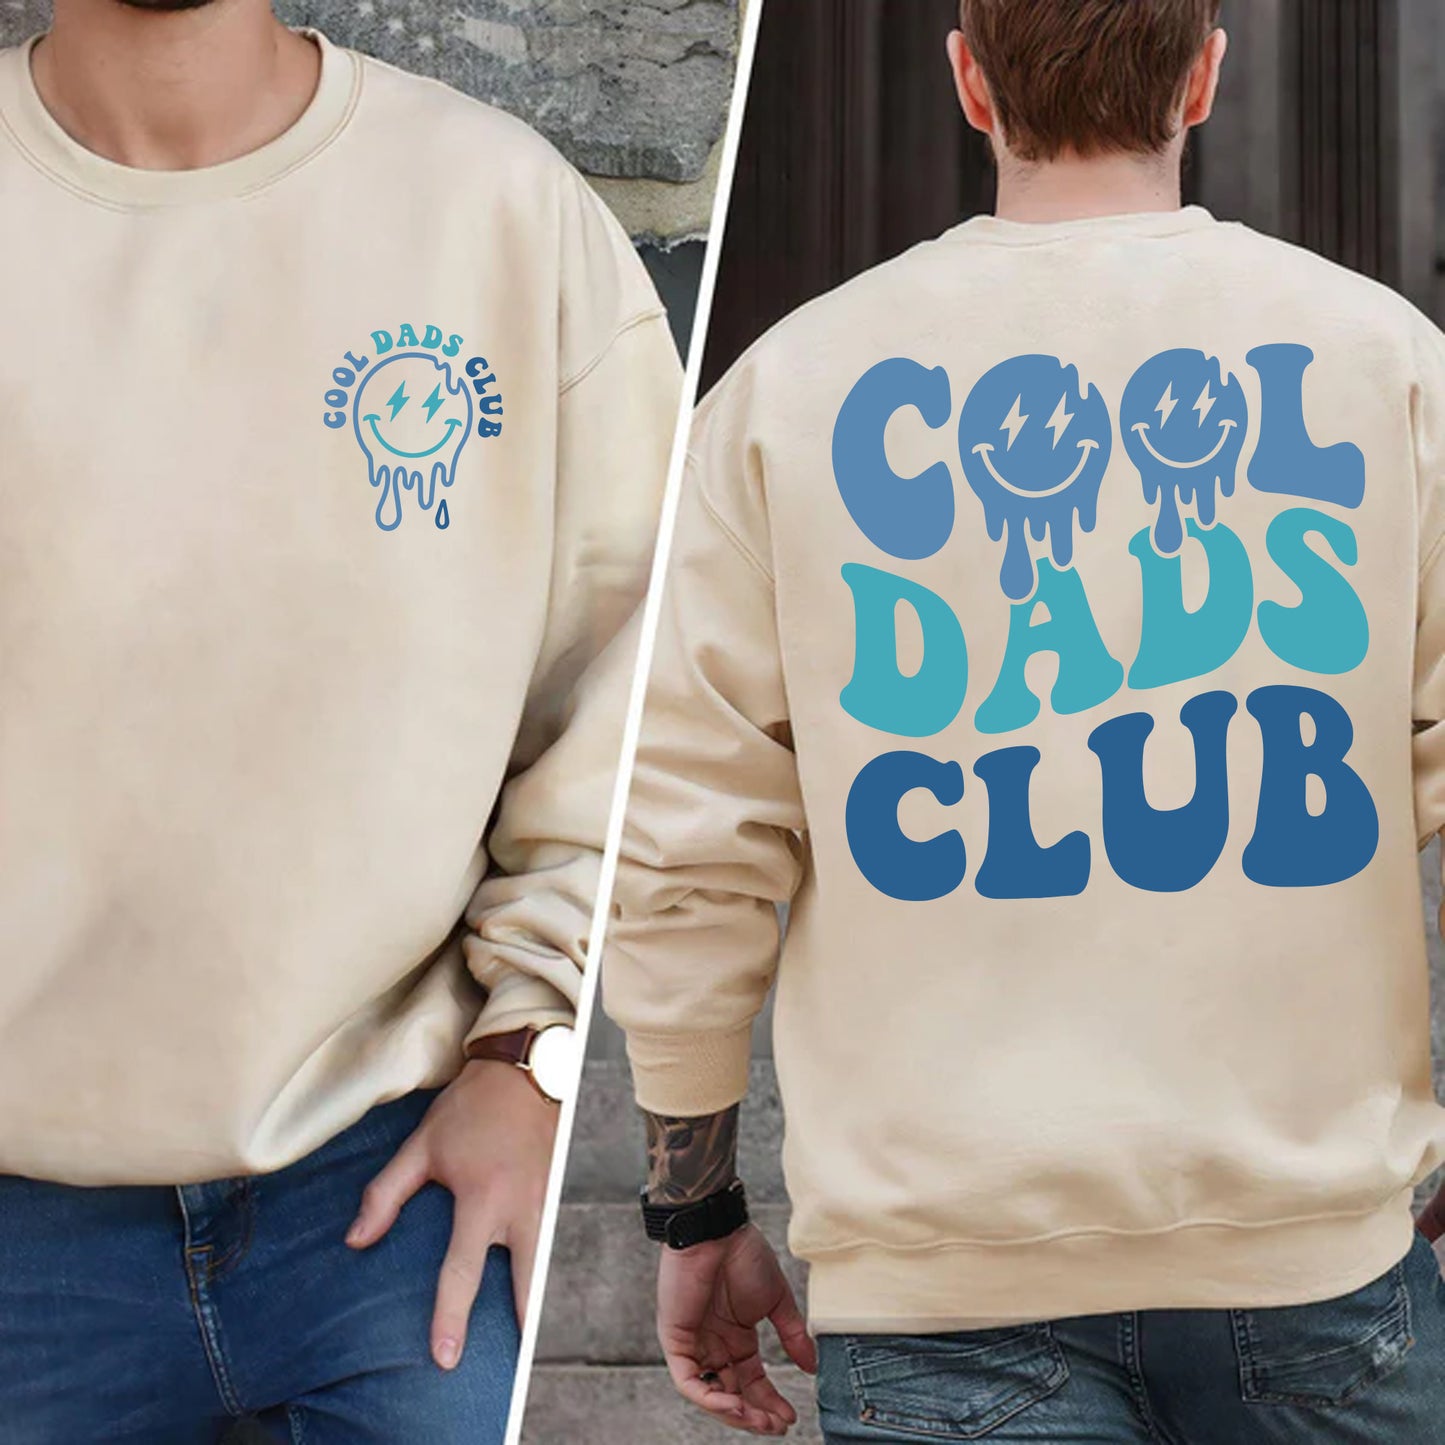 Cool Dads Club Shirt, Cool Dads Club